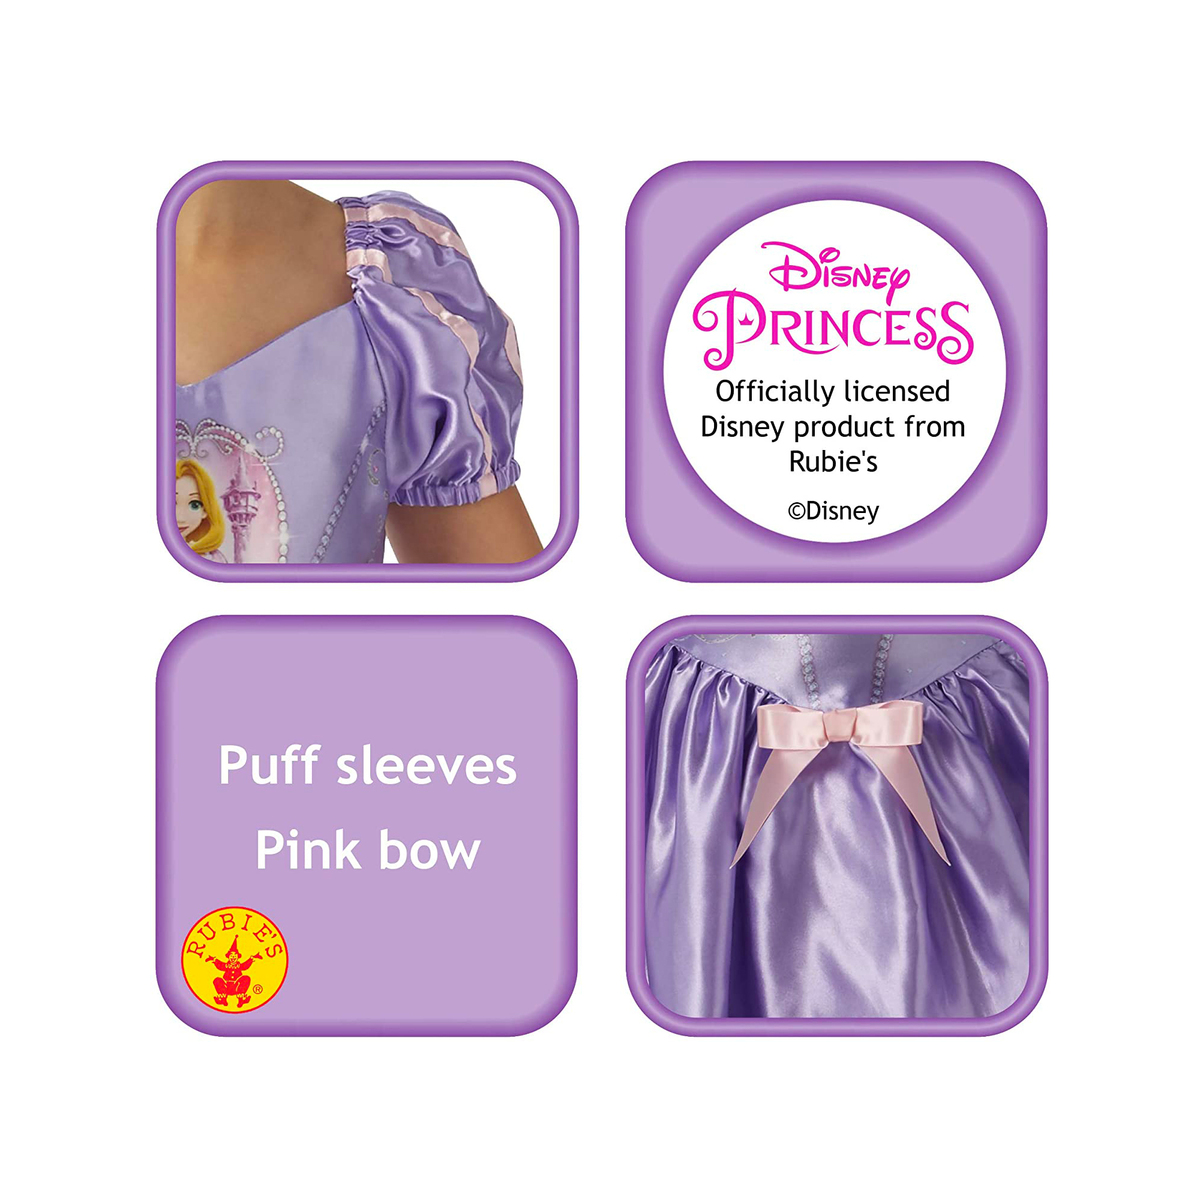 Rapunzel Costume 620539-S